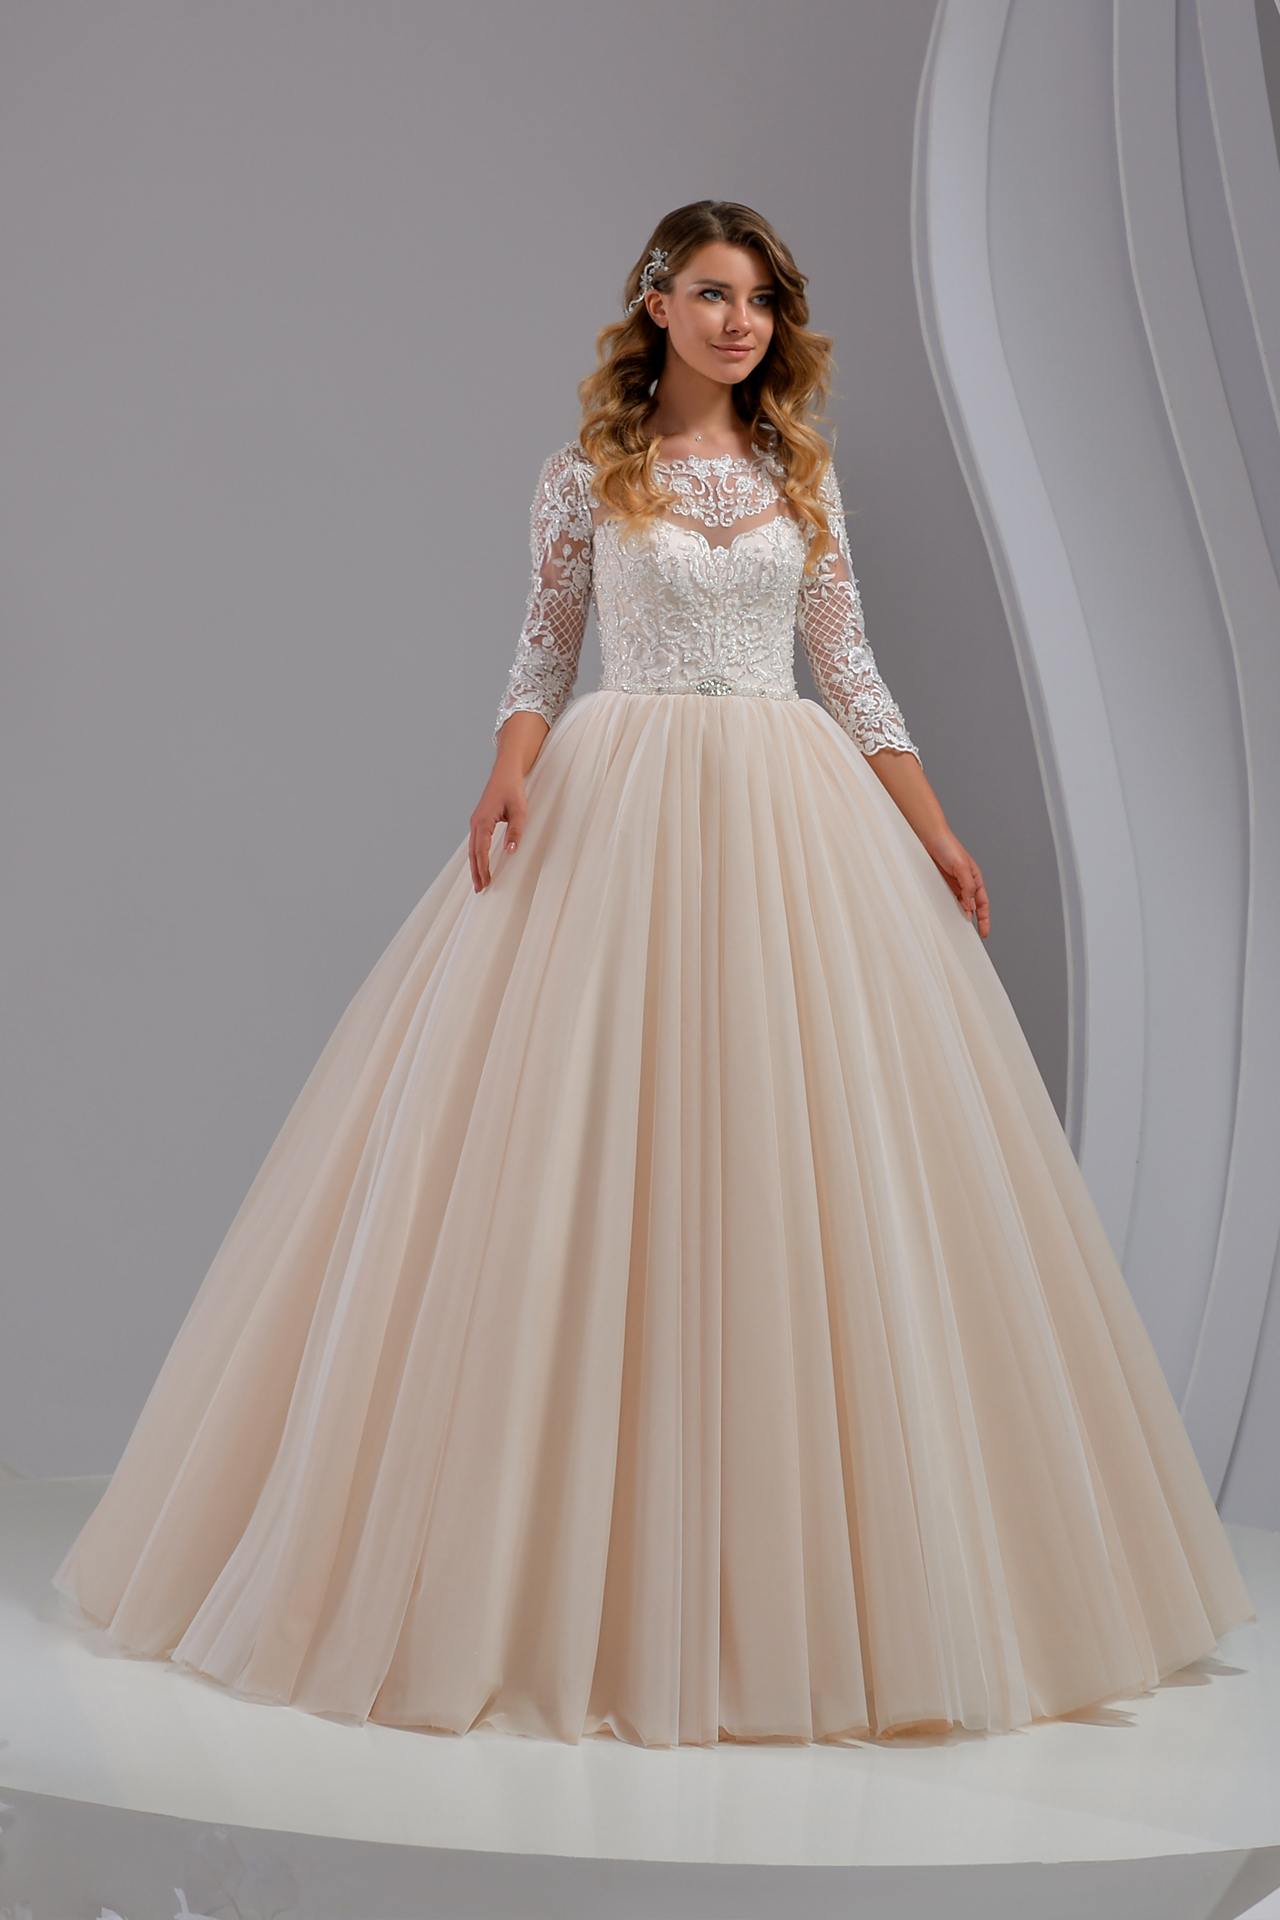 Lace ball gown wedding dress, Blush lace wedding dress,Lace tulle wedding dress, Layered tulle wedding dress, Hope